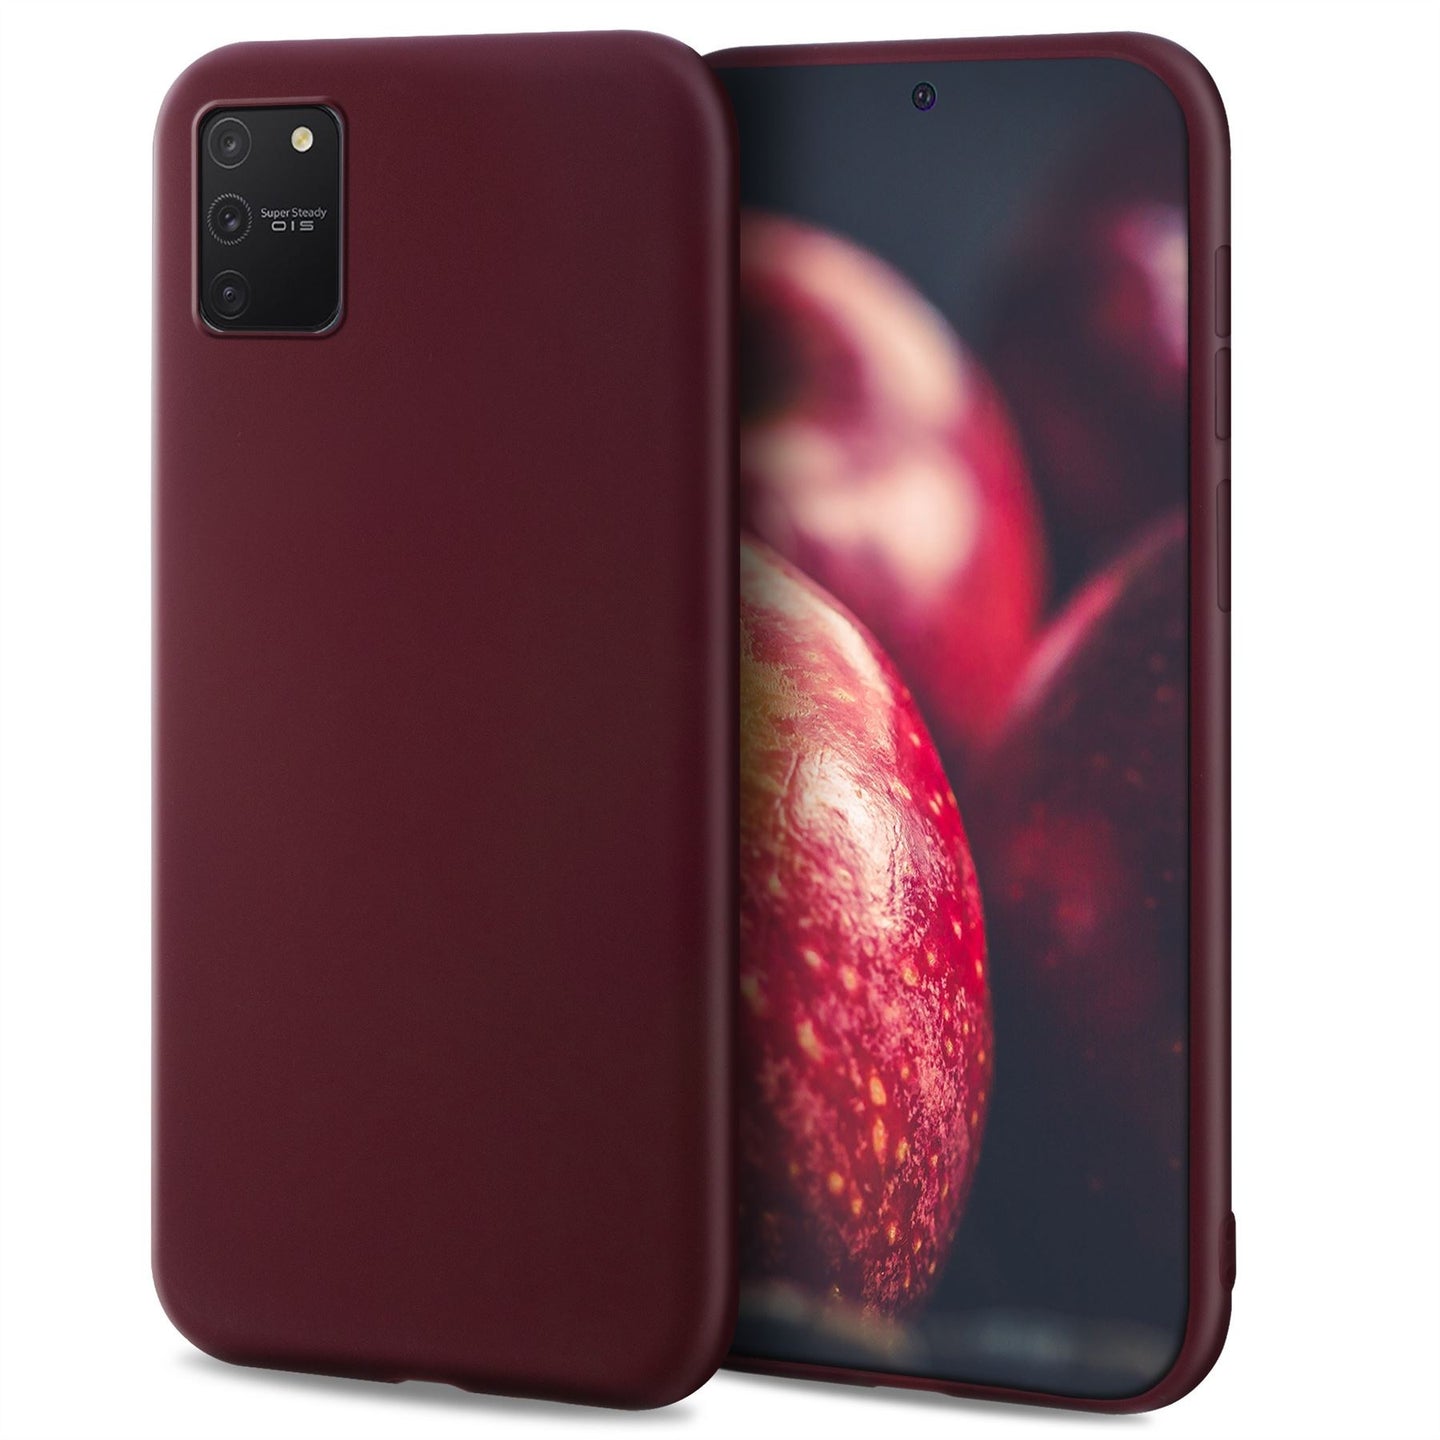 Moozy Minimalist Series Silicone Case for Samsung S10 Lite, Wine Red - Matte Finish Slim Soft TPU Cover